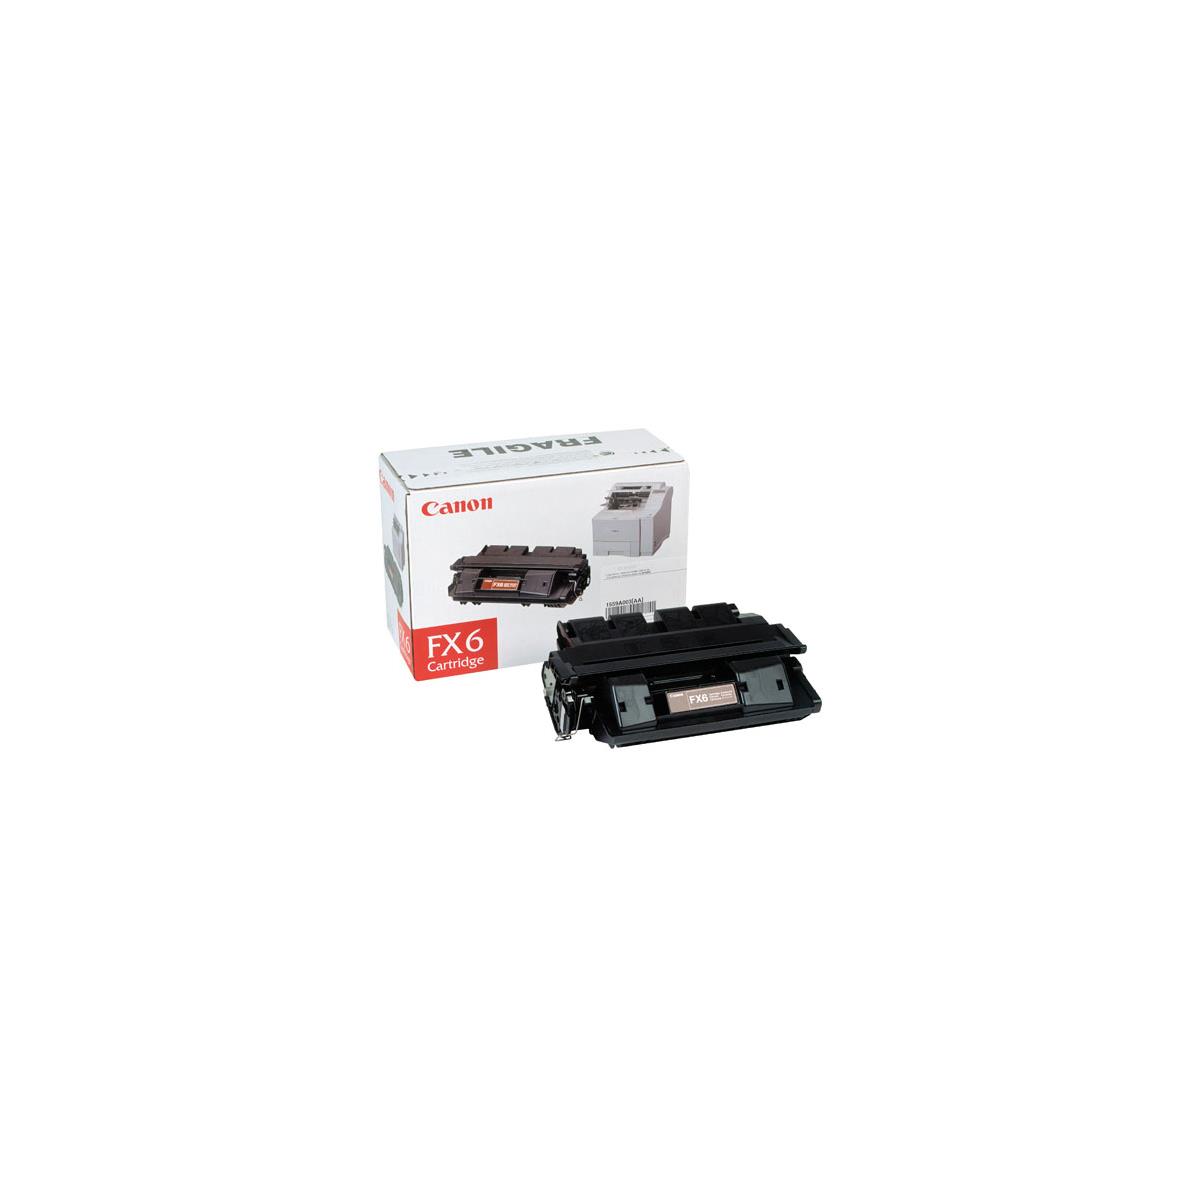 Image of Canon FX-6 Black Laser Toner Cartridge